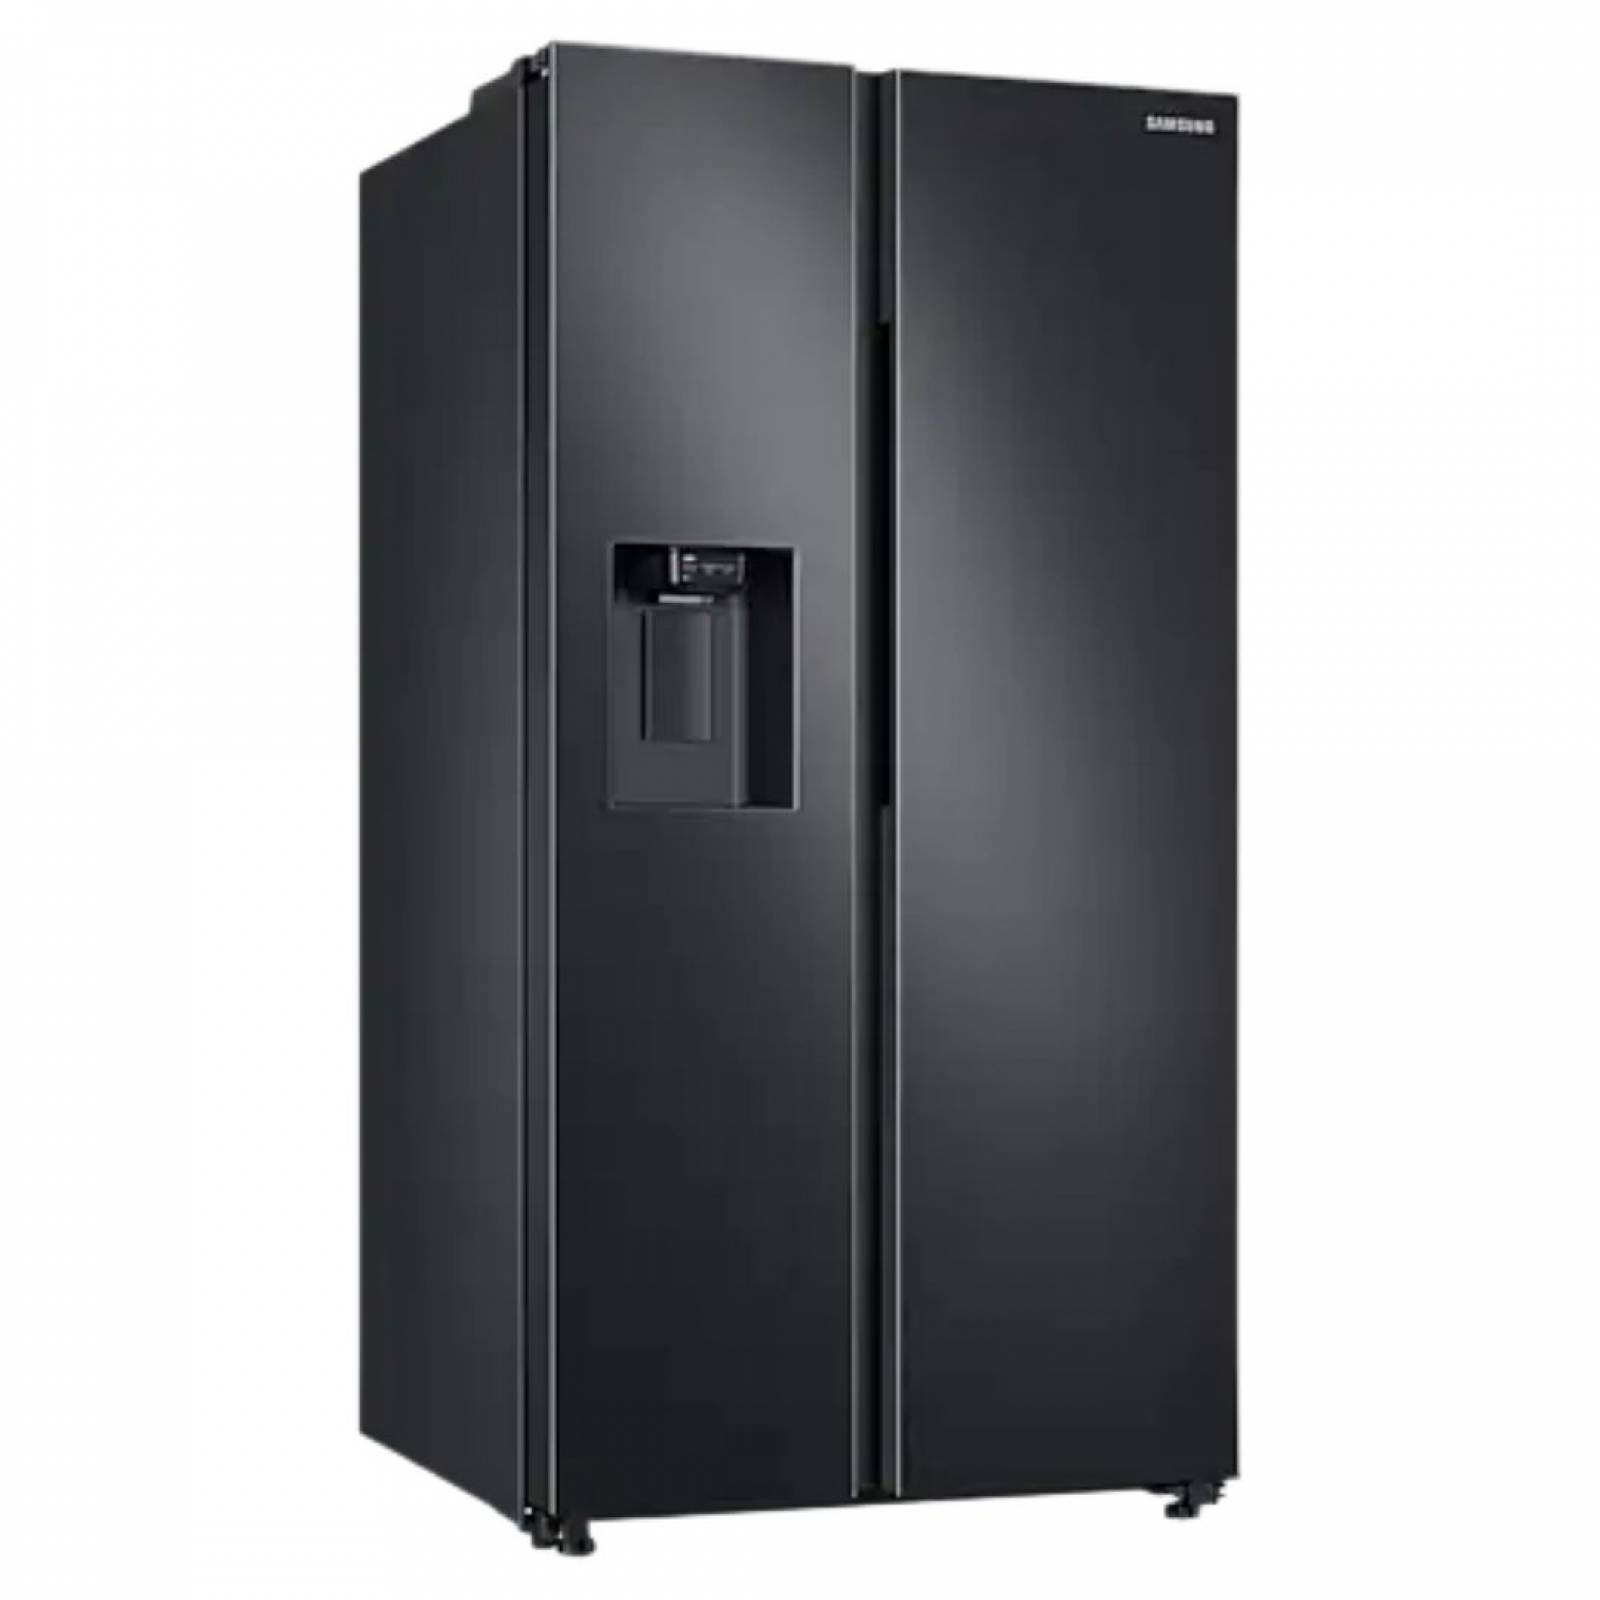 Refrigerador 27 pies side by side inverter marca samsung